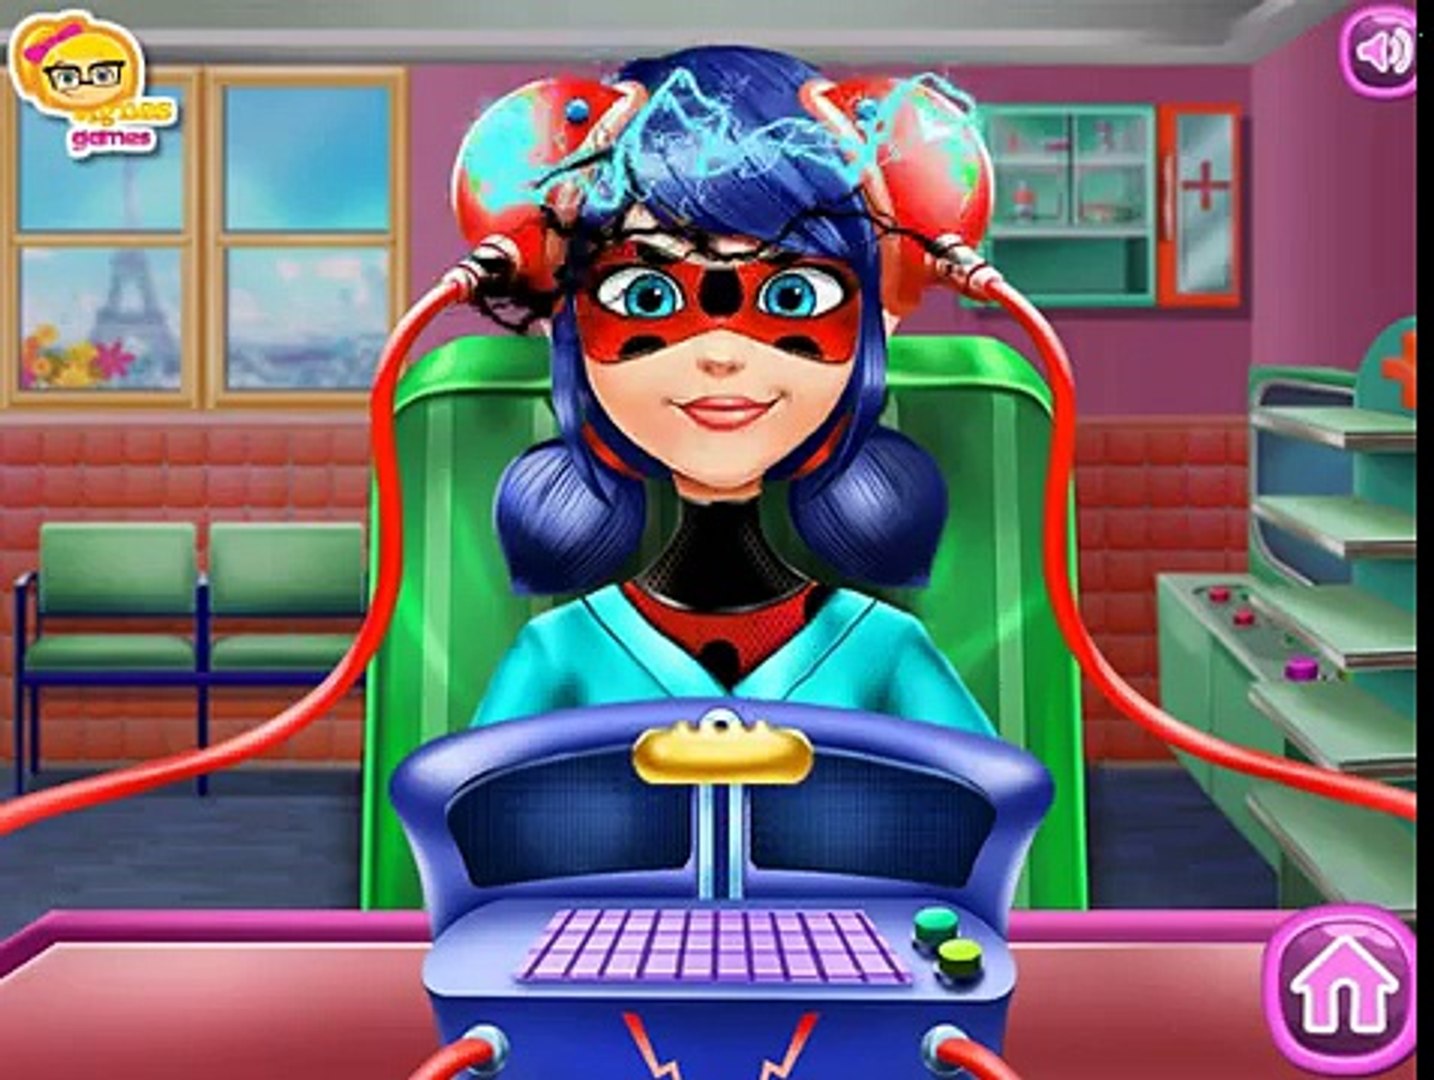 Ladybug Brain Doctor - Surgery Cartoon Game Movie for Kids - Disney Miraculous Ladybug